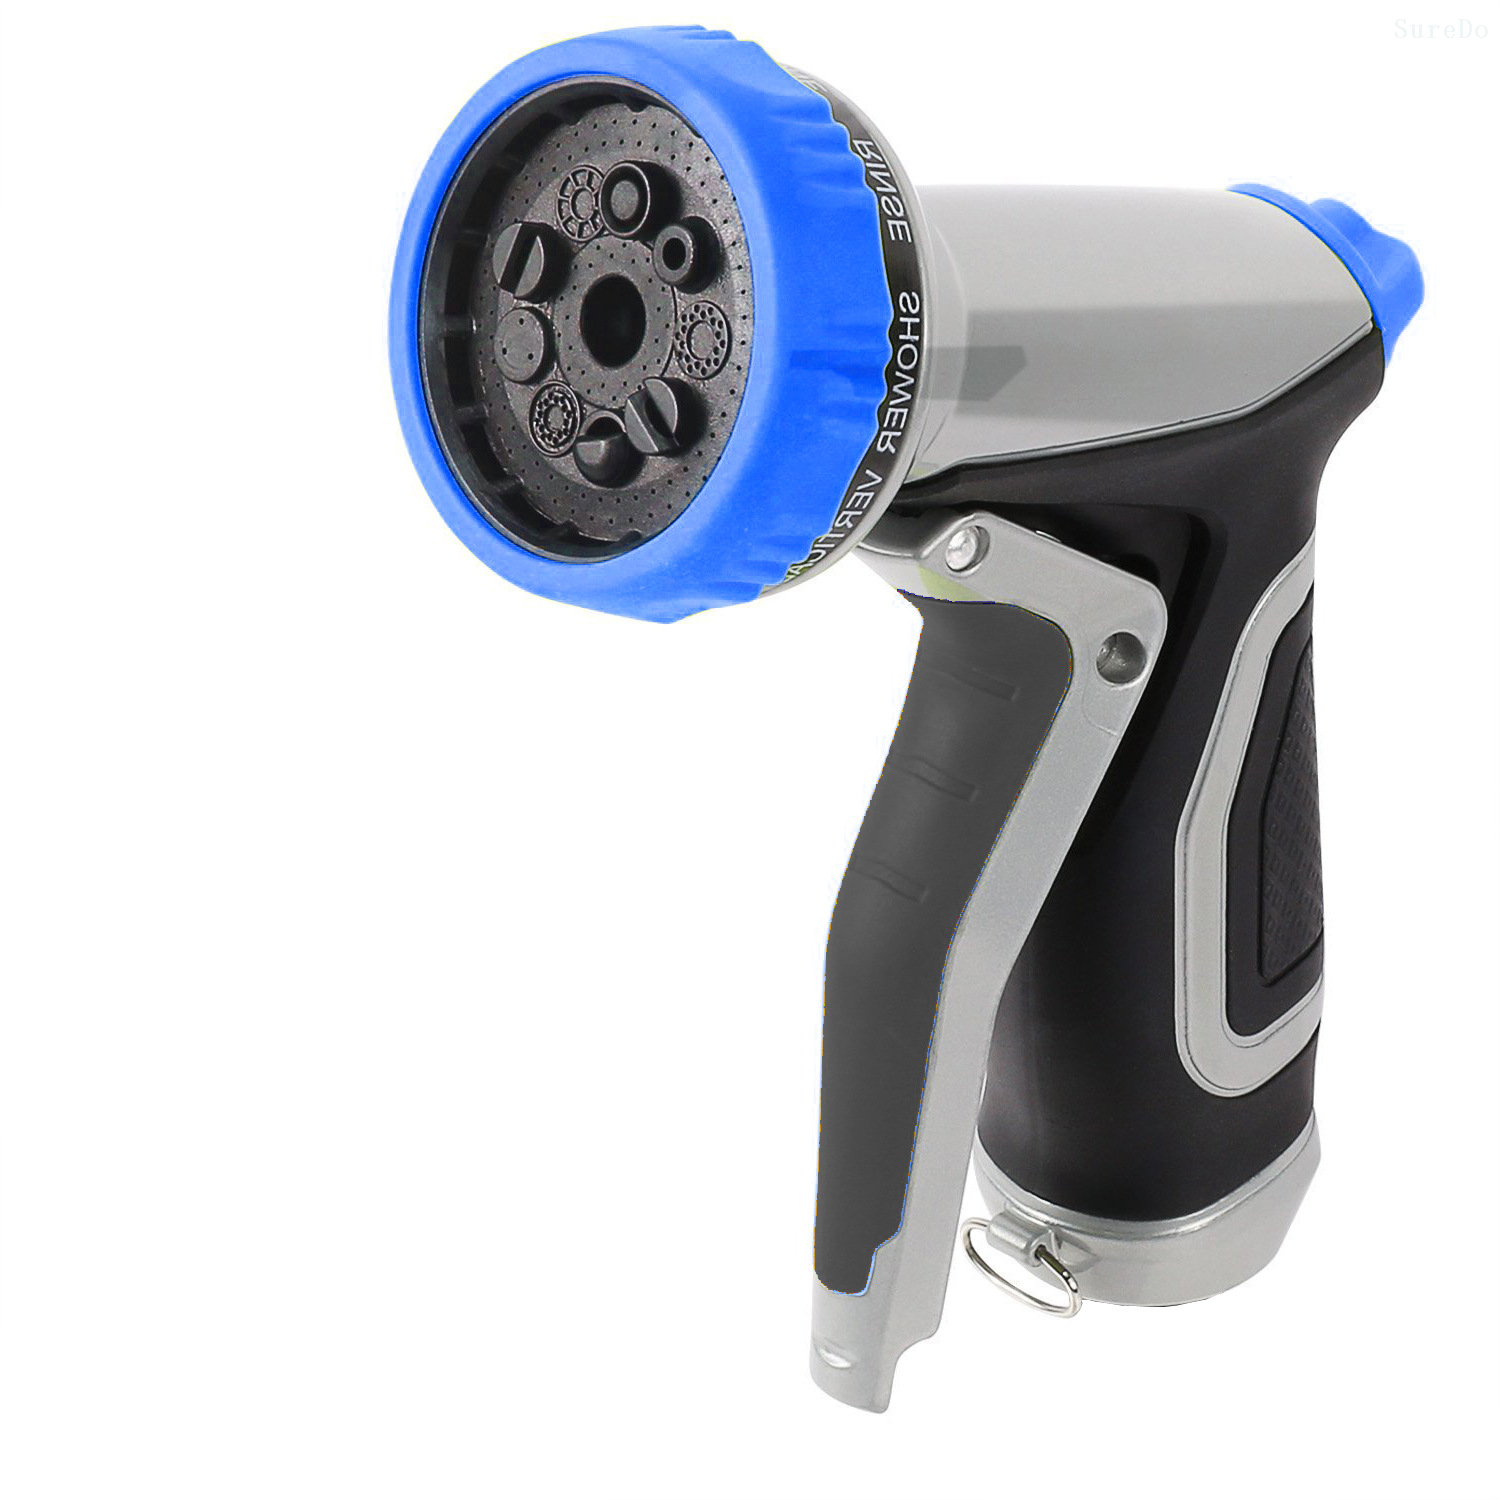 Plastic adjustable garden water gun for car wash